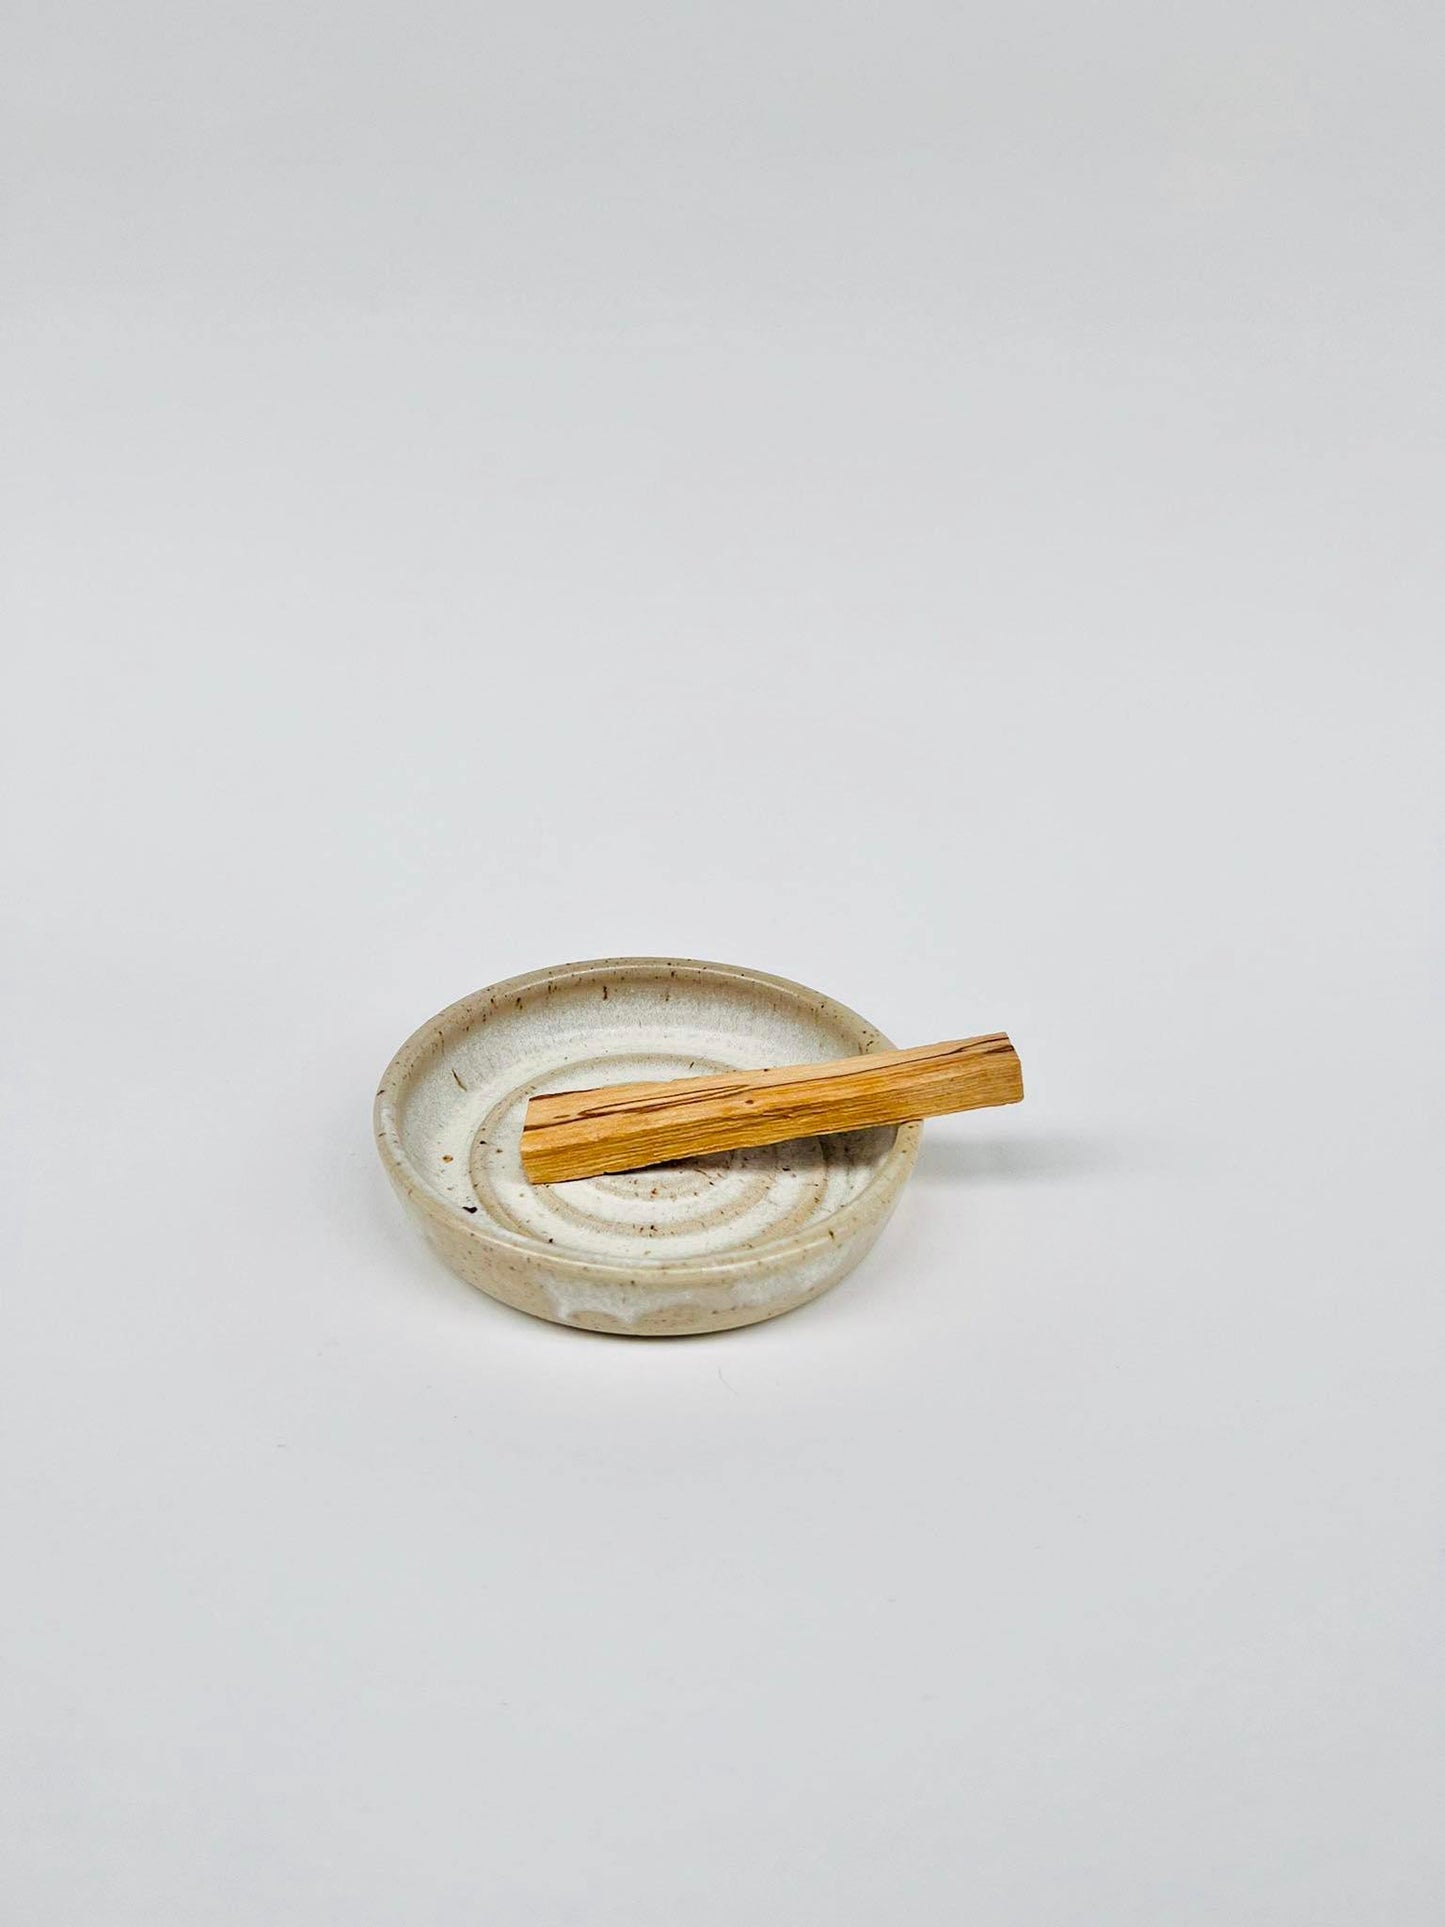 Handmade Ceramic incense burner